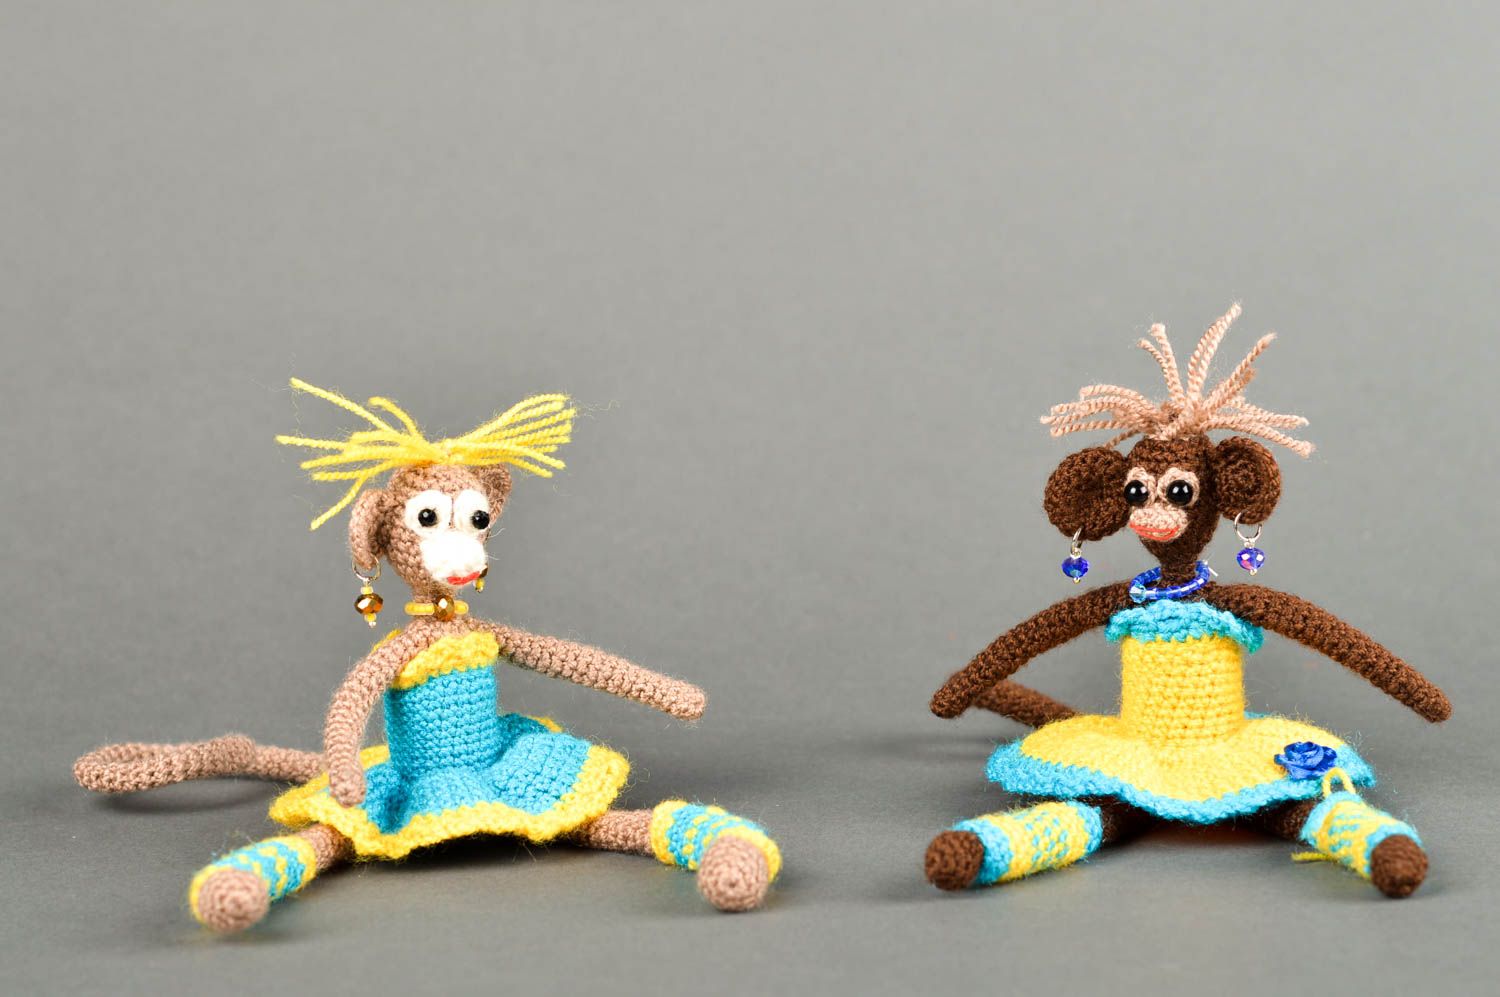 Handmade crocheted toys creative toys for children trendy toys nursery decor photo 2